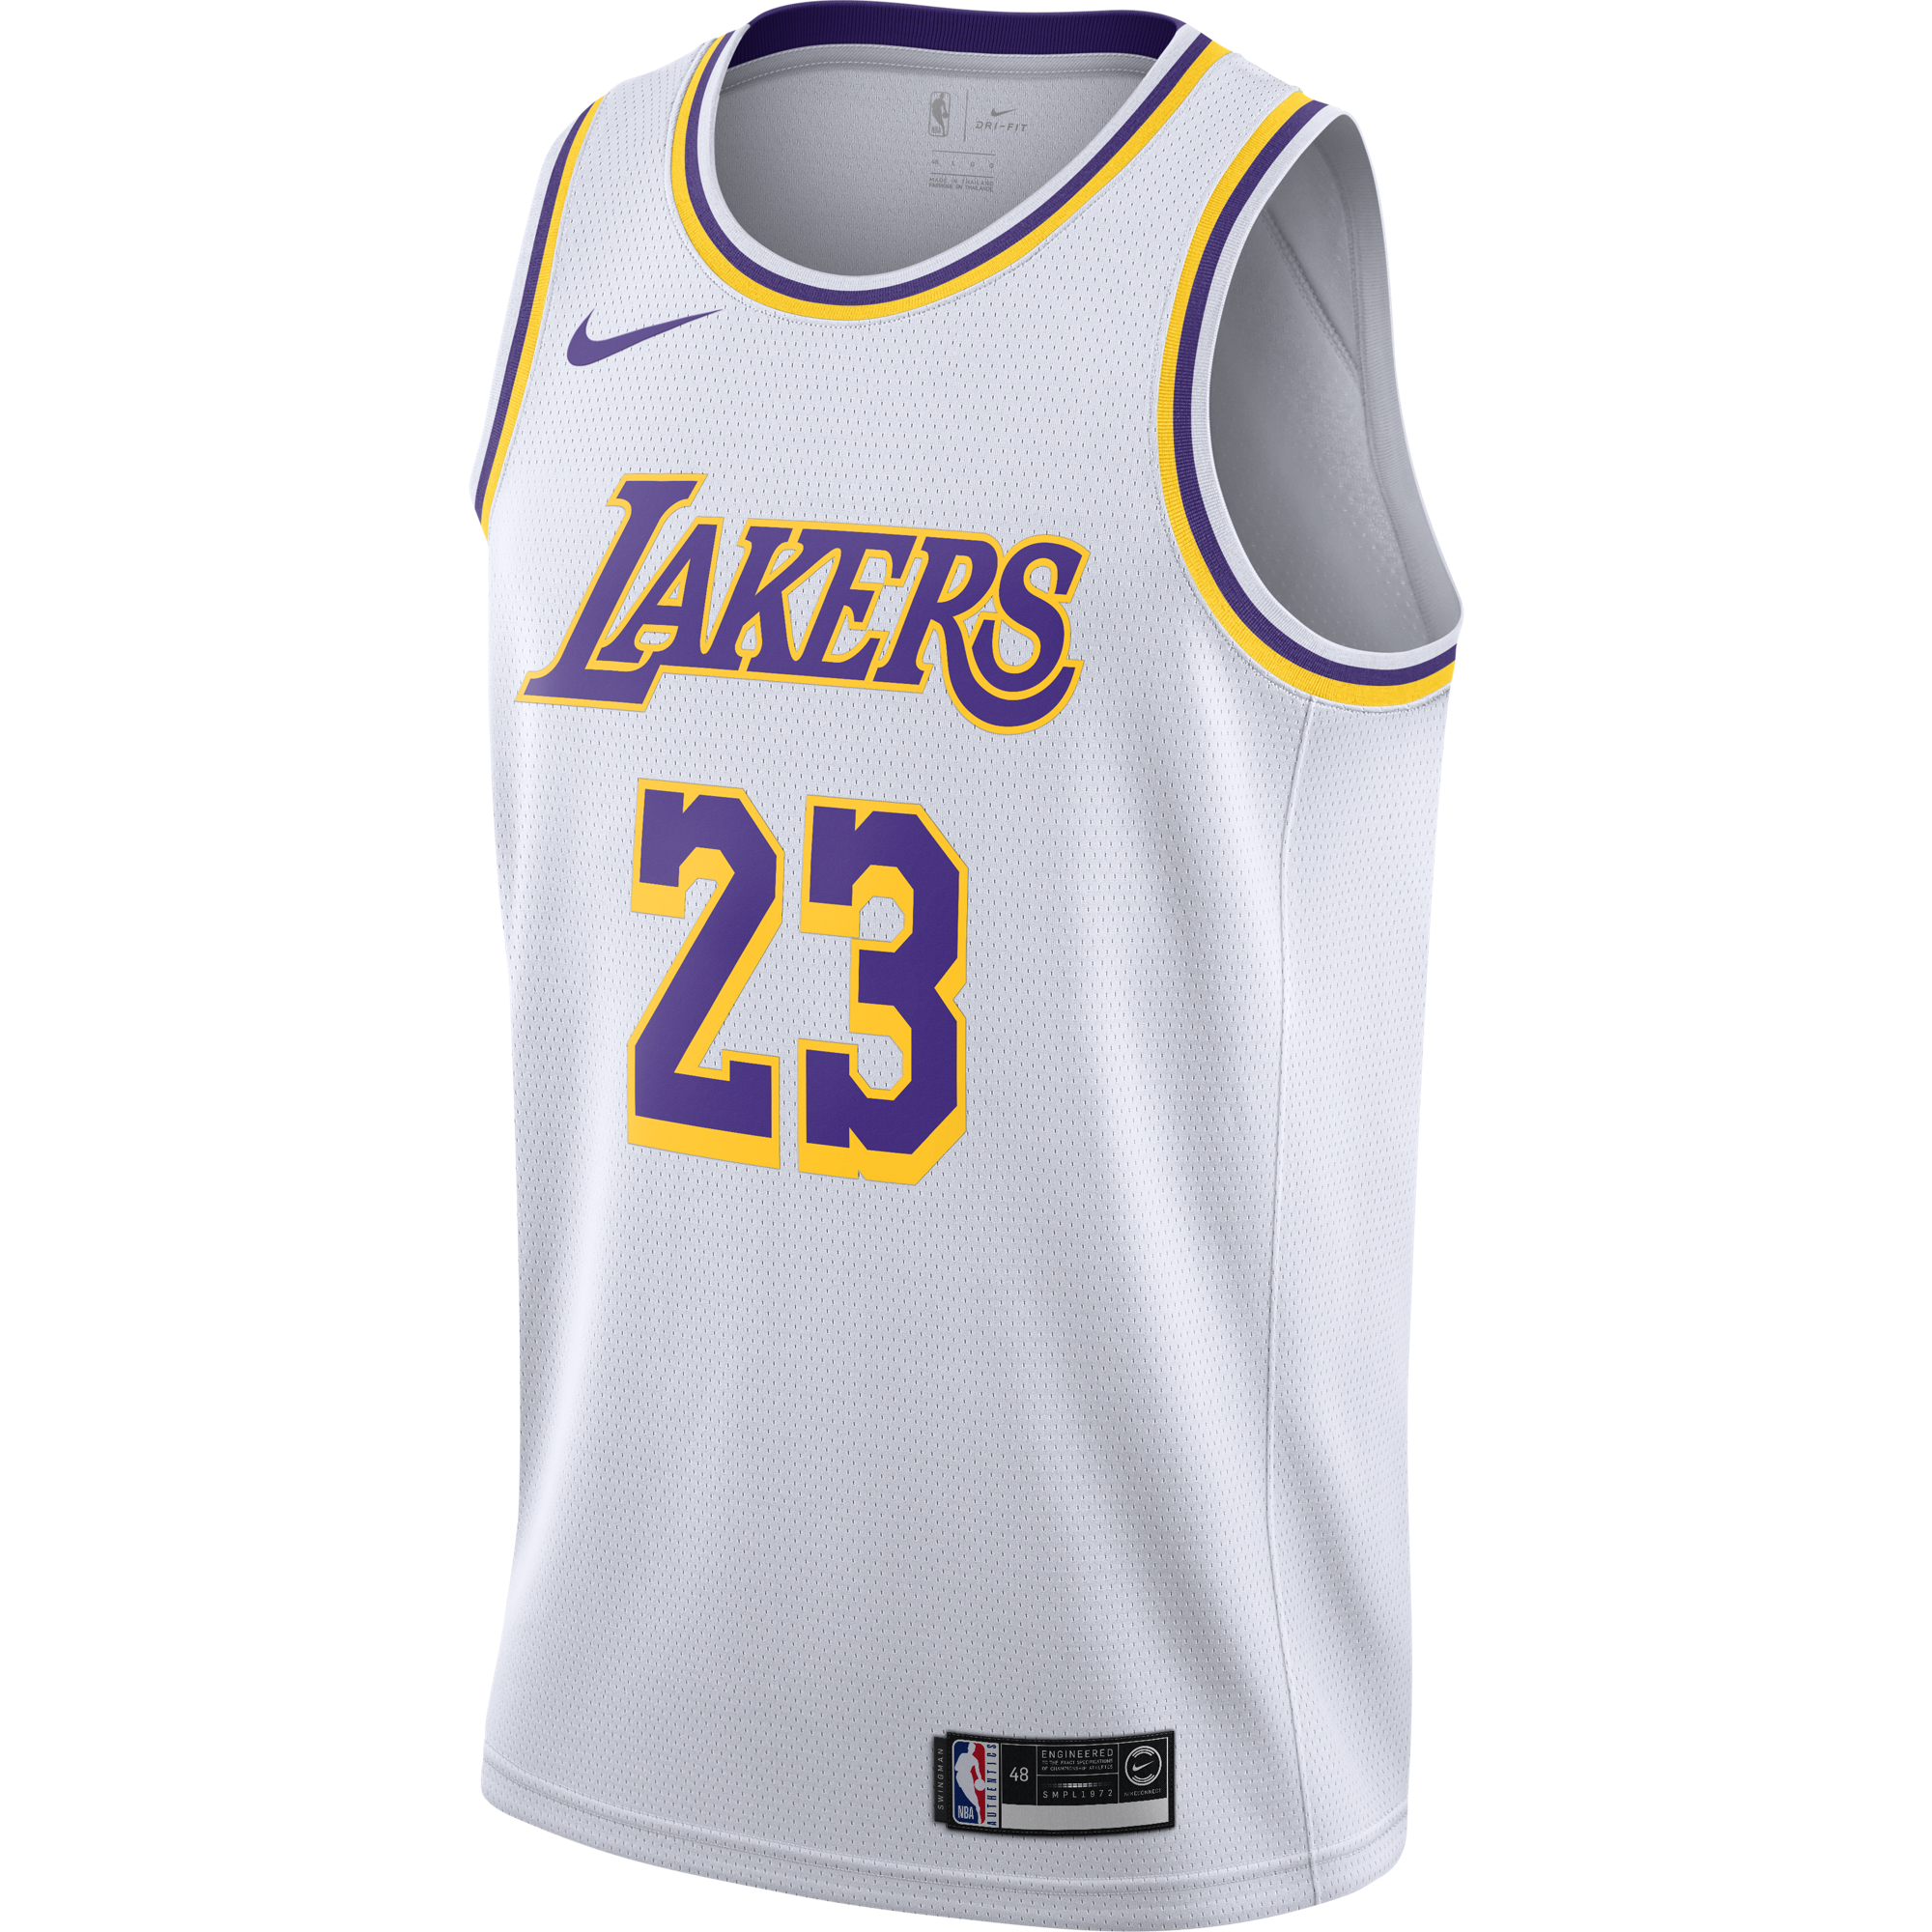 Nike Nba Los Angeles Lakers Lebron James Swingman Home Jersey For 75 00 Kicksmaniac Com